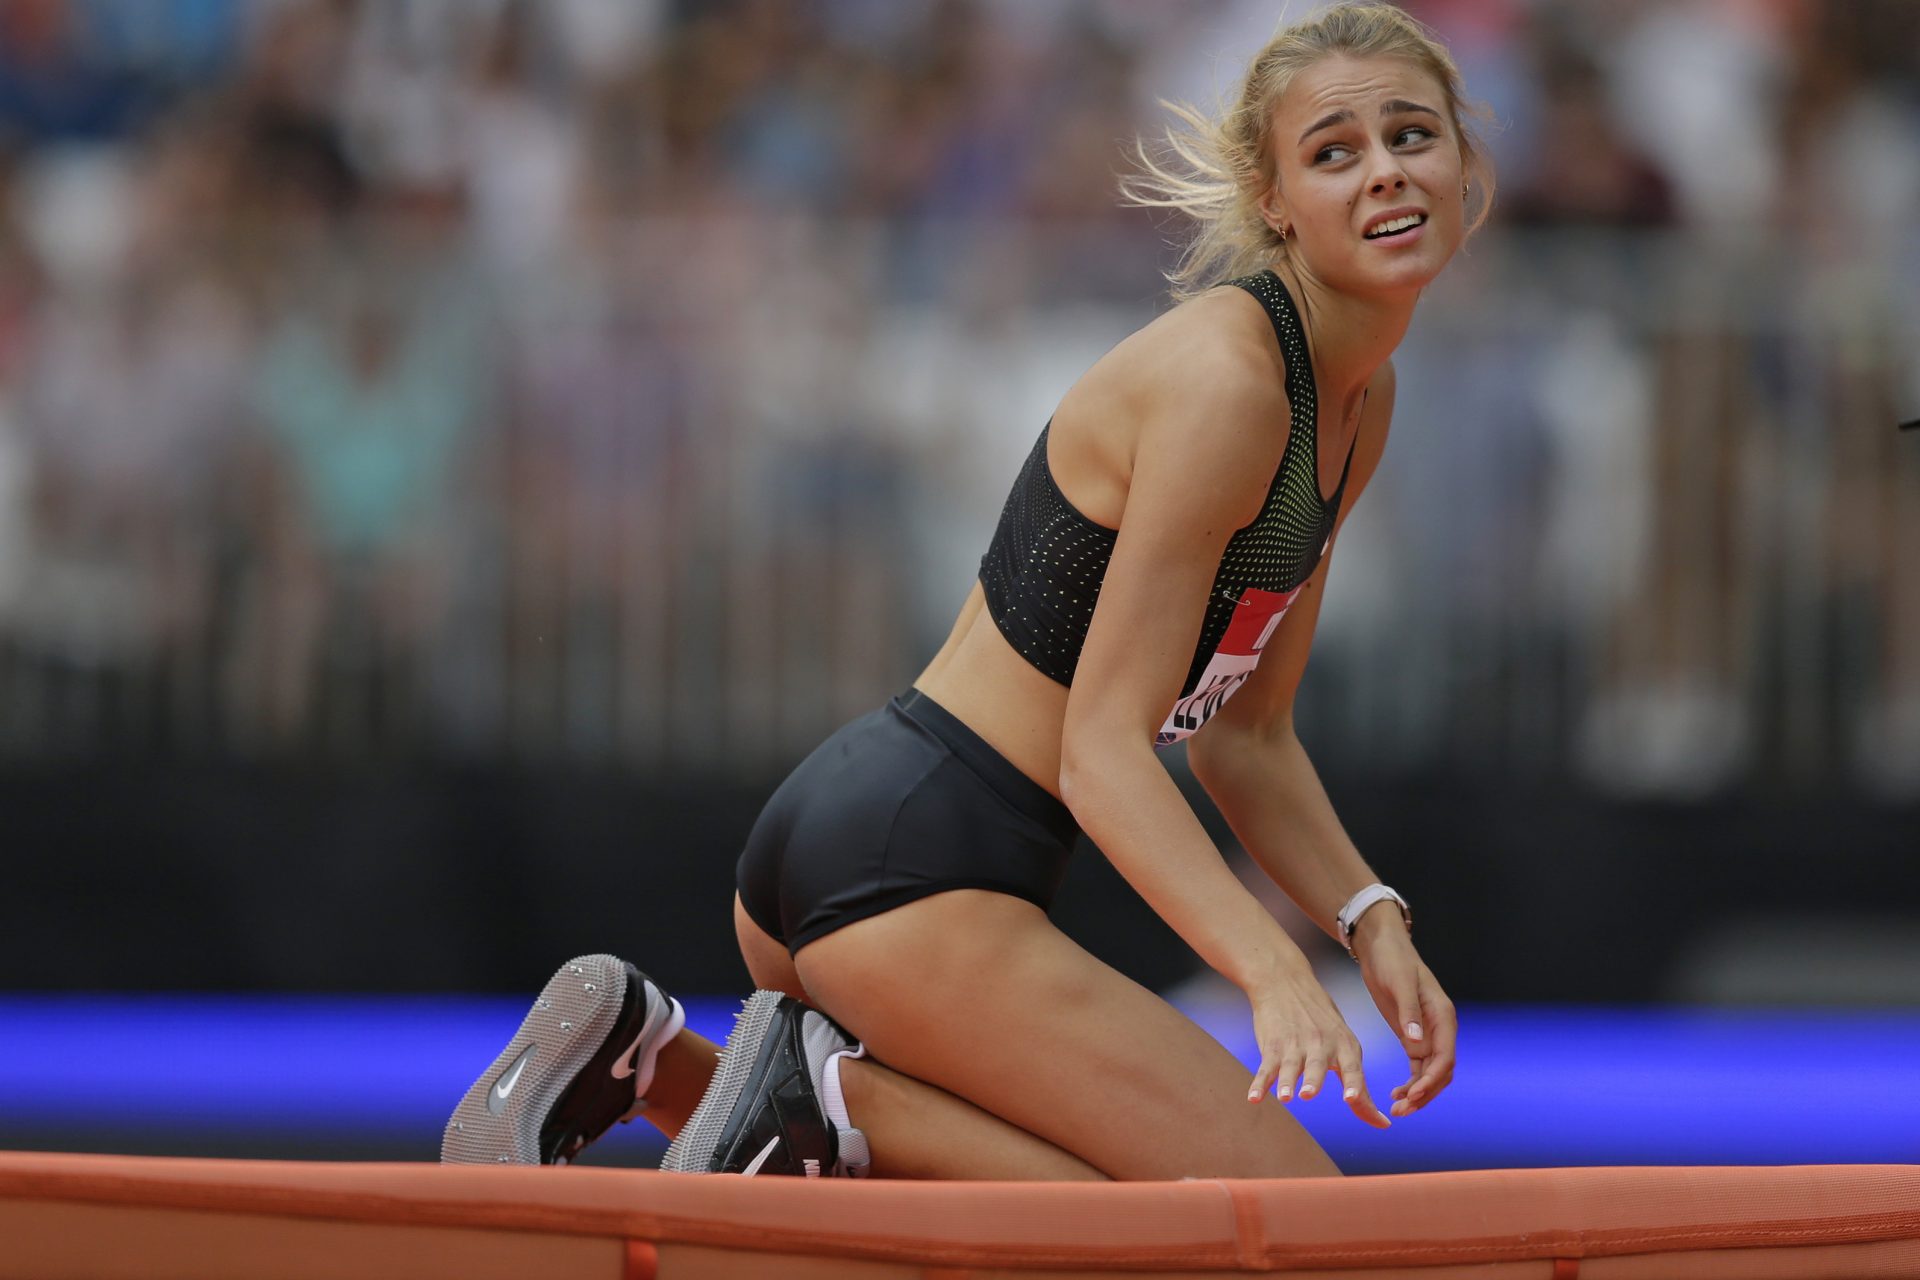 Yuliya Levchenko, Ukraine's high-jump and Instagram star